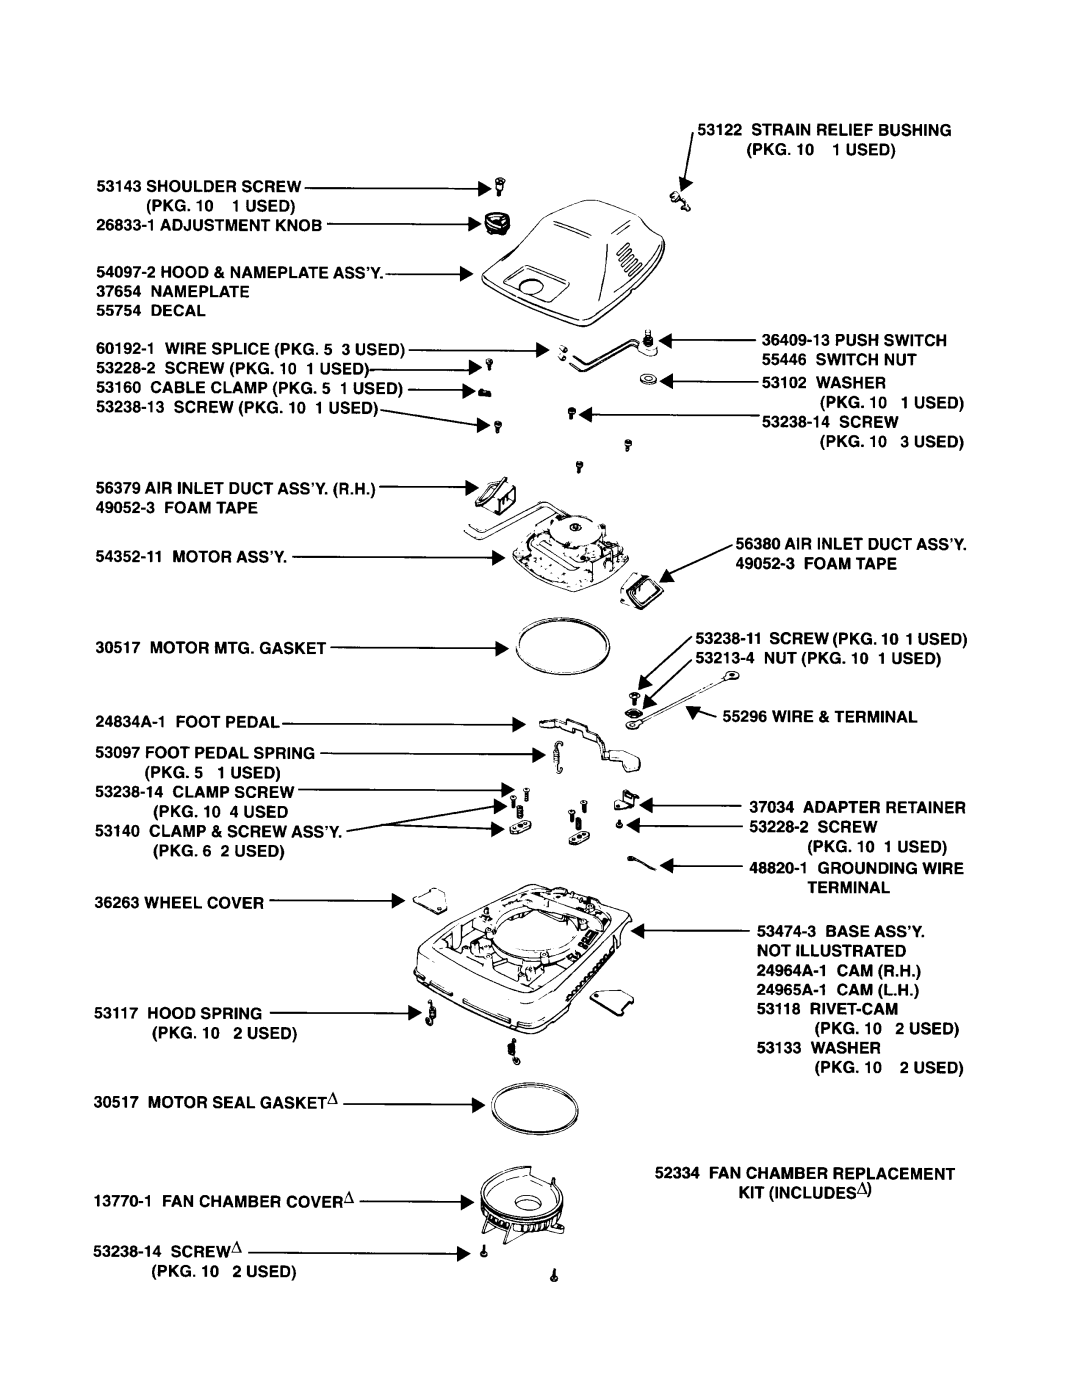 Sanitaire SC886-E manual 